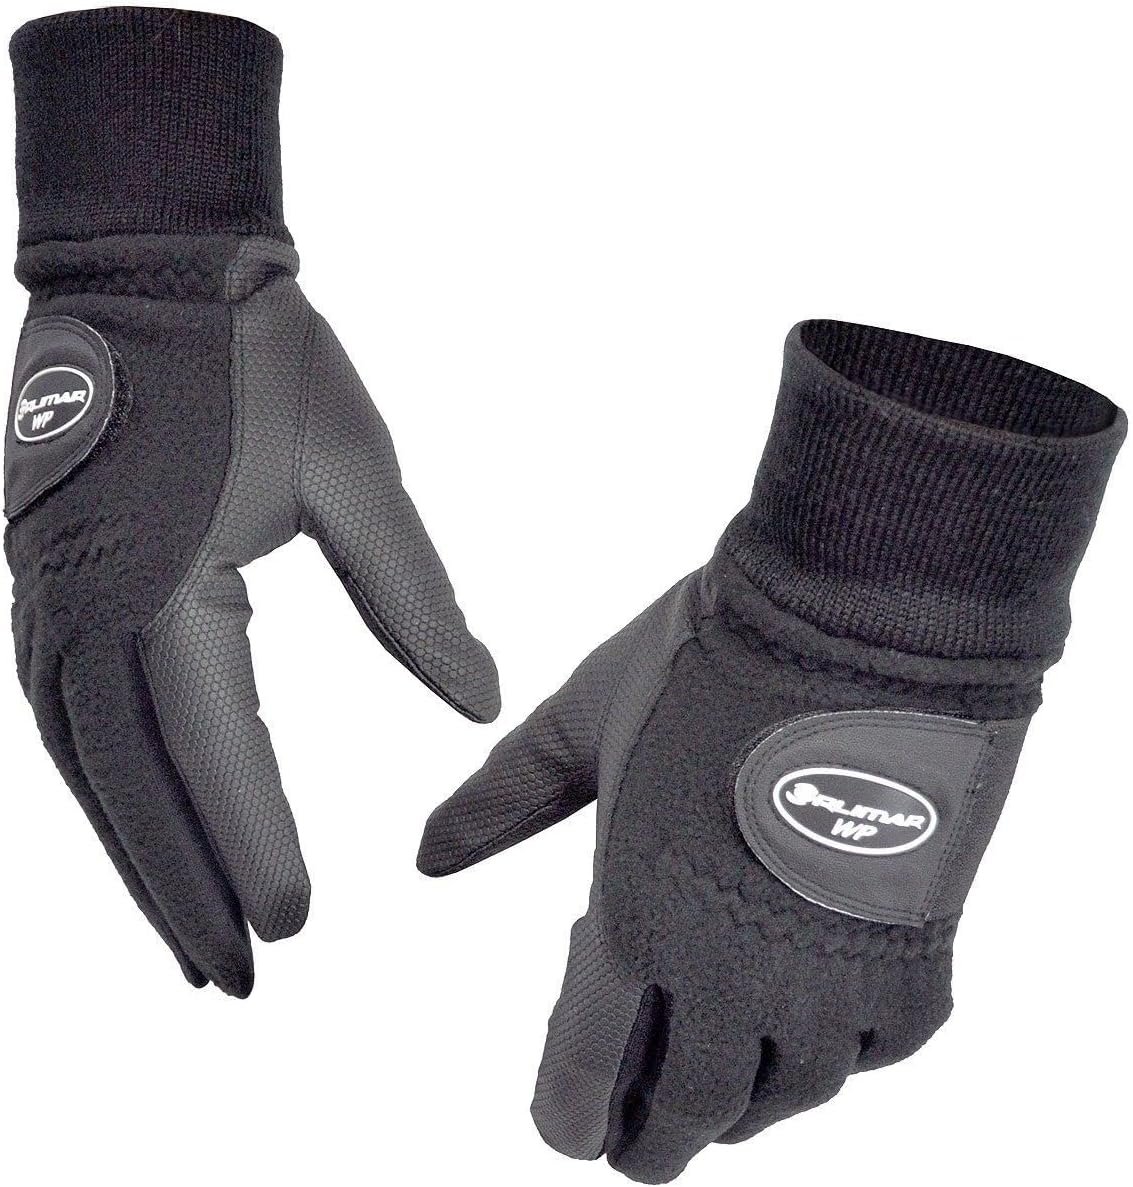 Orlimar Mens Winter Performance Fleece Golf Gloves (Pair), Black